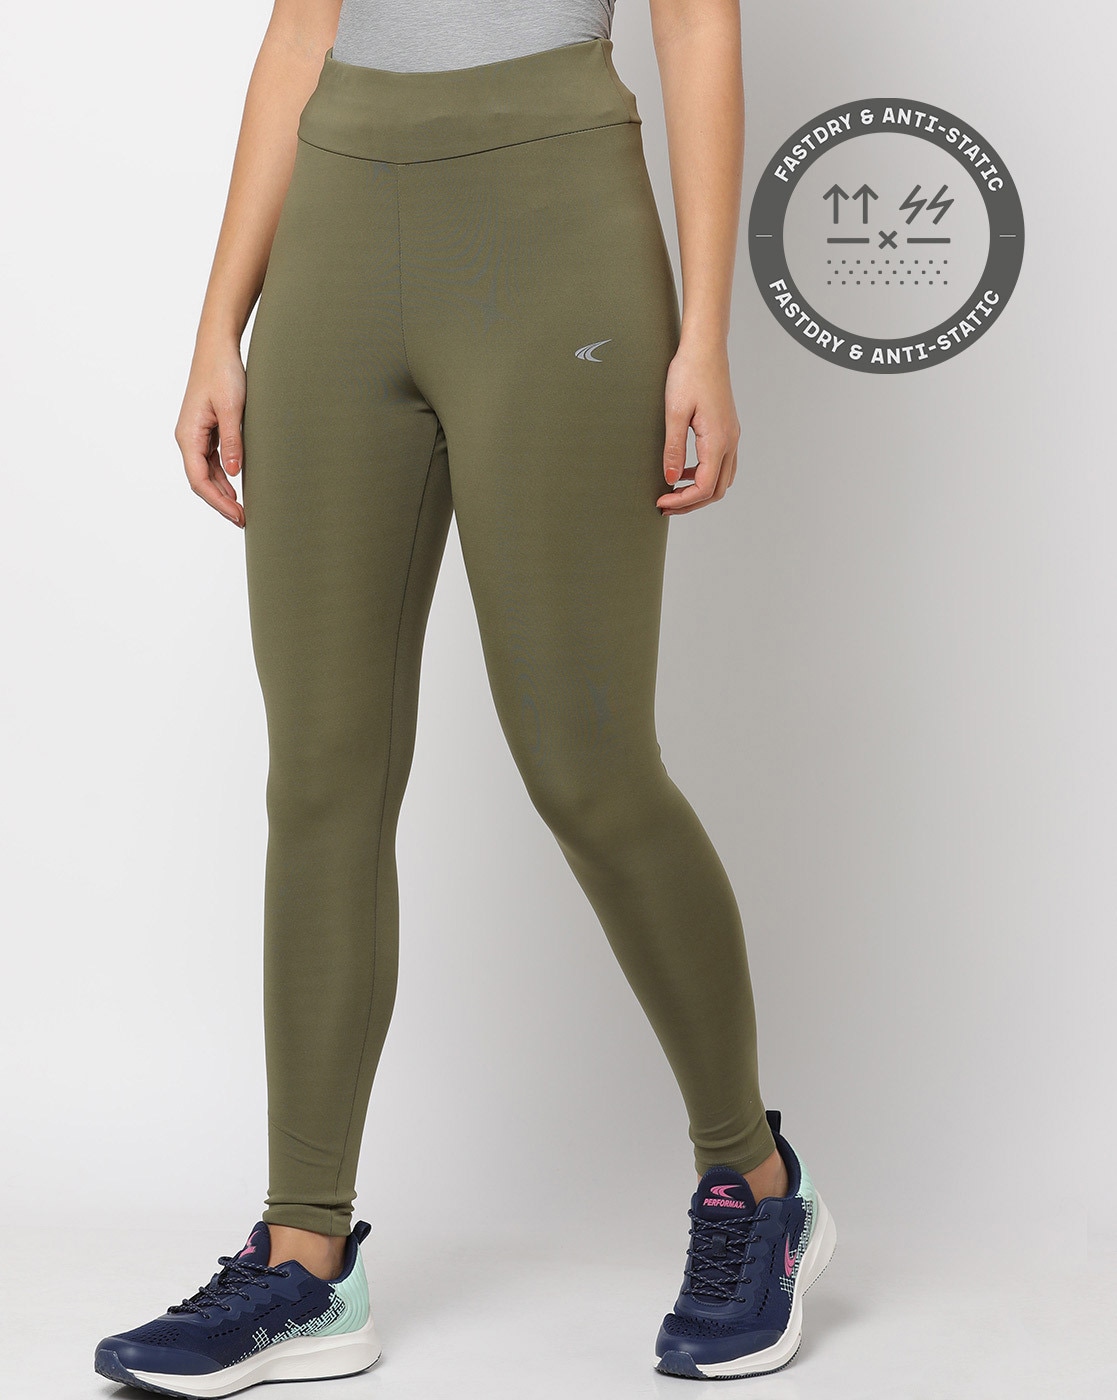 Buy HAPPY FRIDAYS Sport Yoga Shorts Over Tights DSG888 in Green